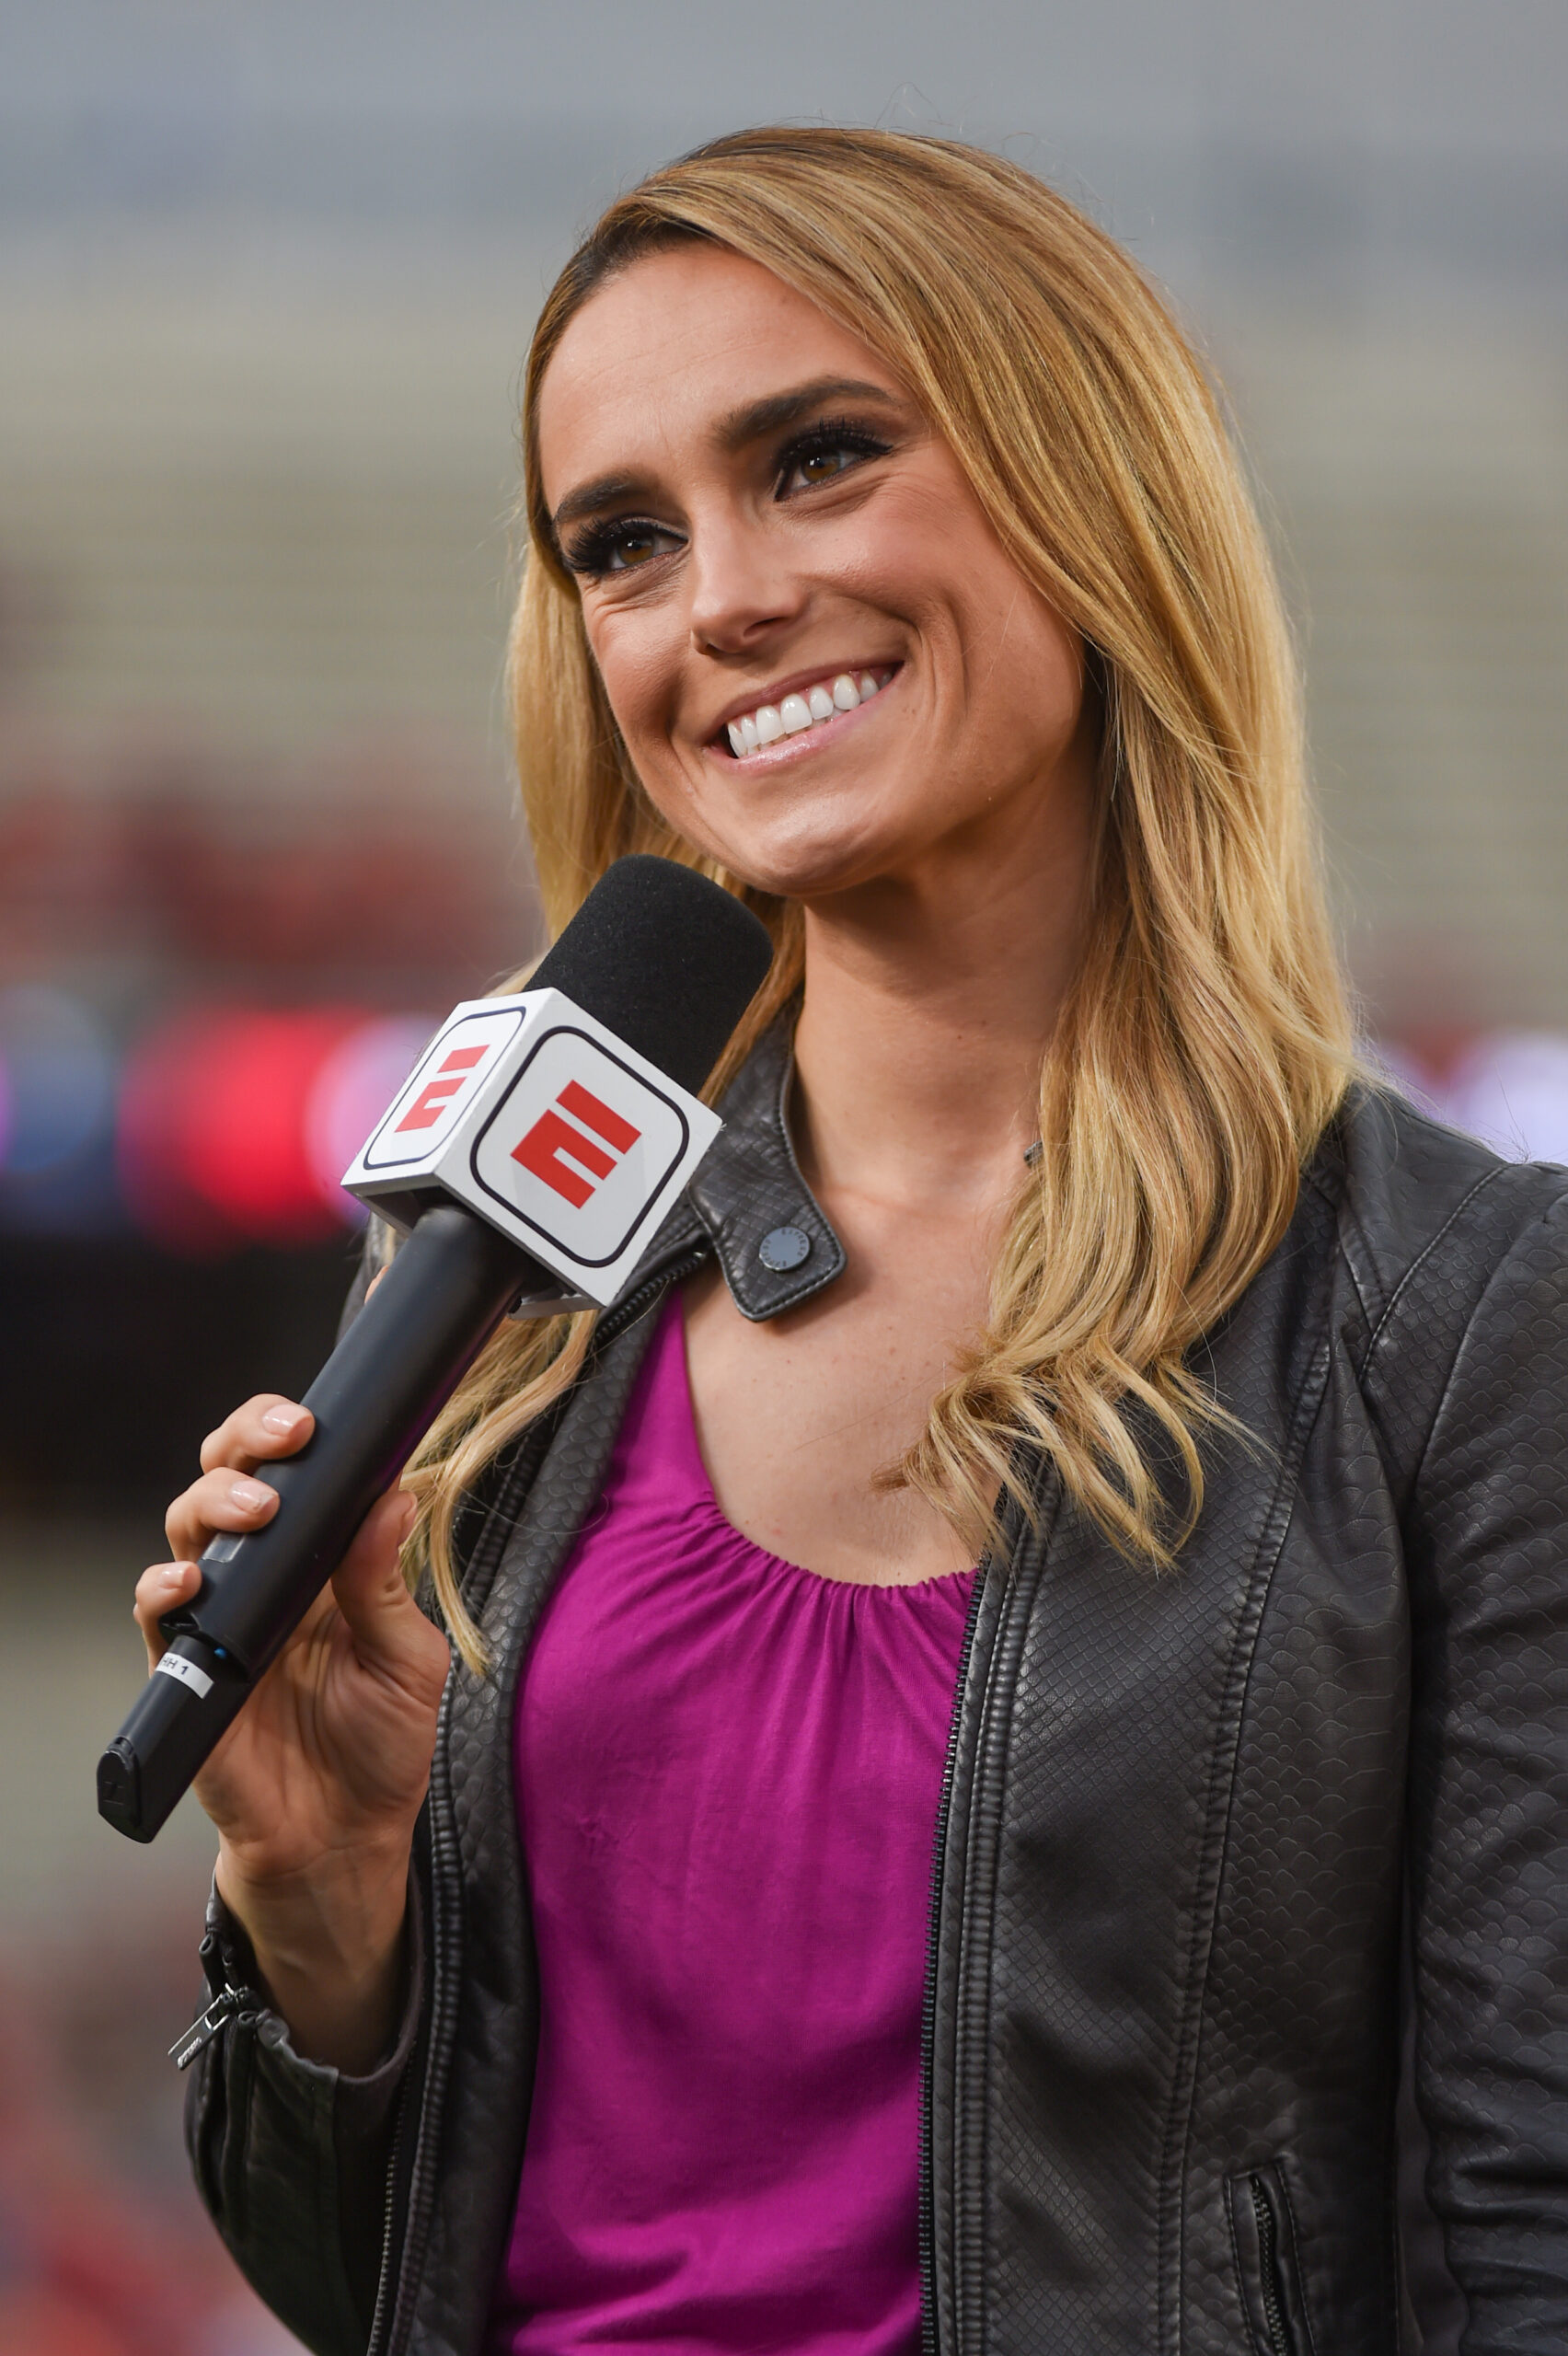 Molly, ESPN's Sportscaster